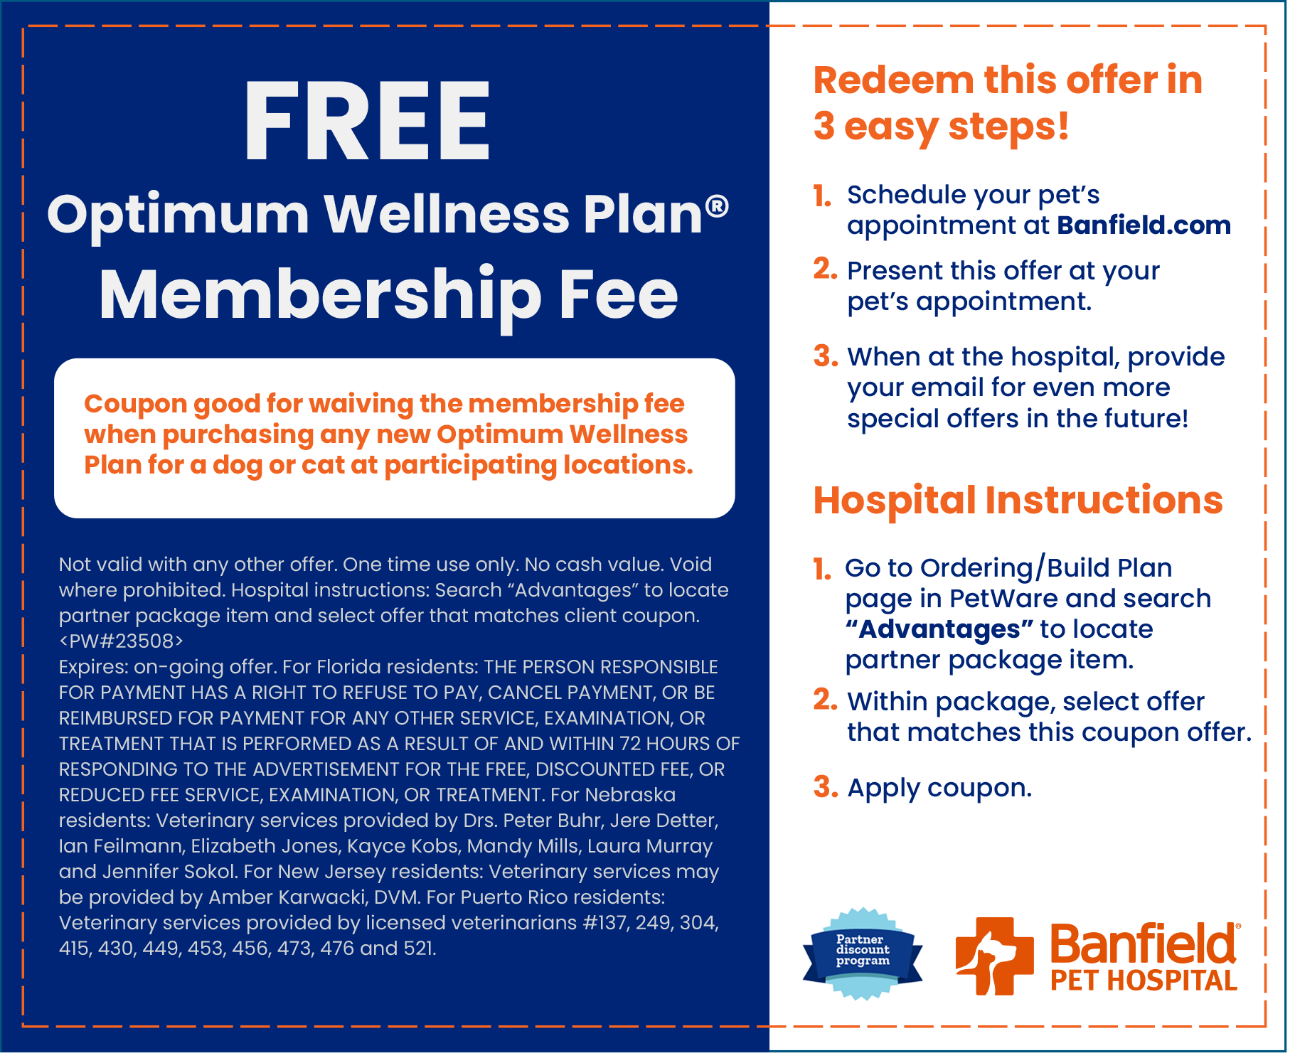 Free Optimum Wellness Plan Membership Fee Coupon